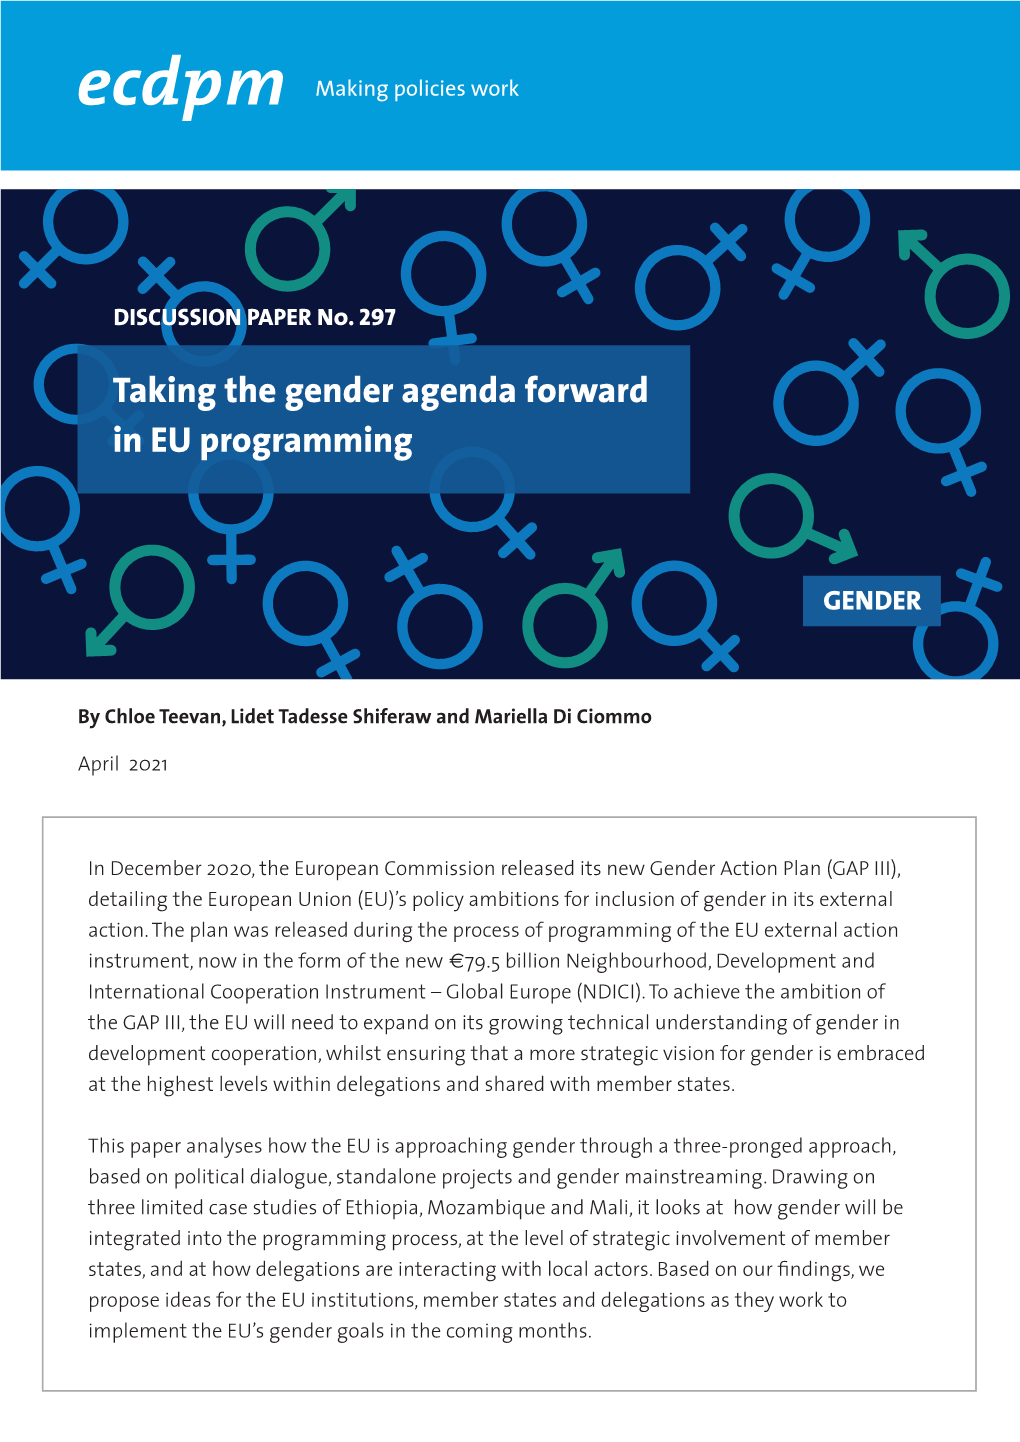 Taking the Gender Agenda Forward in EU Programming